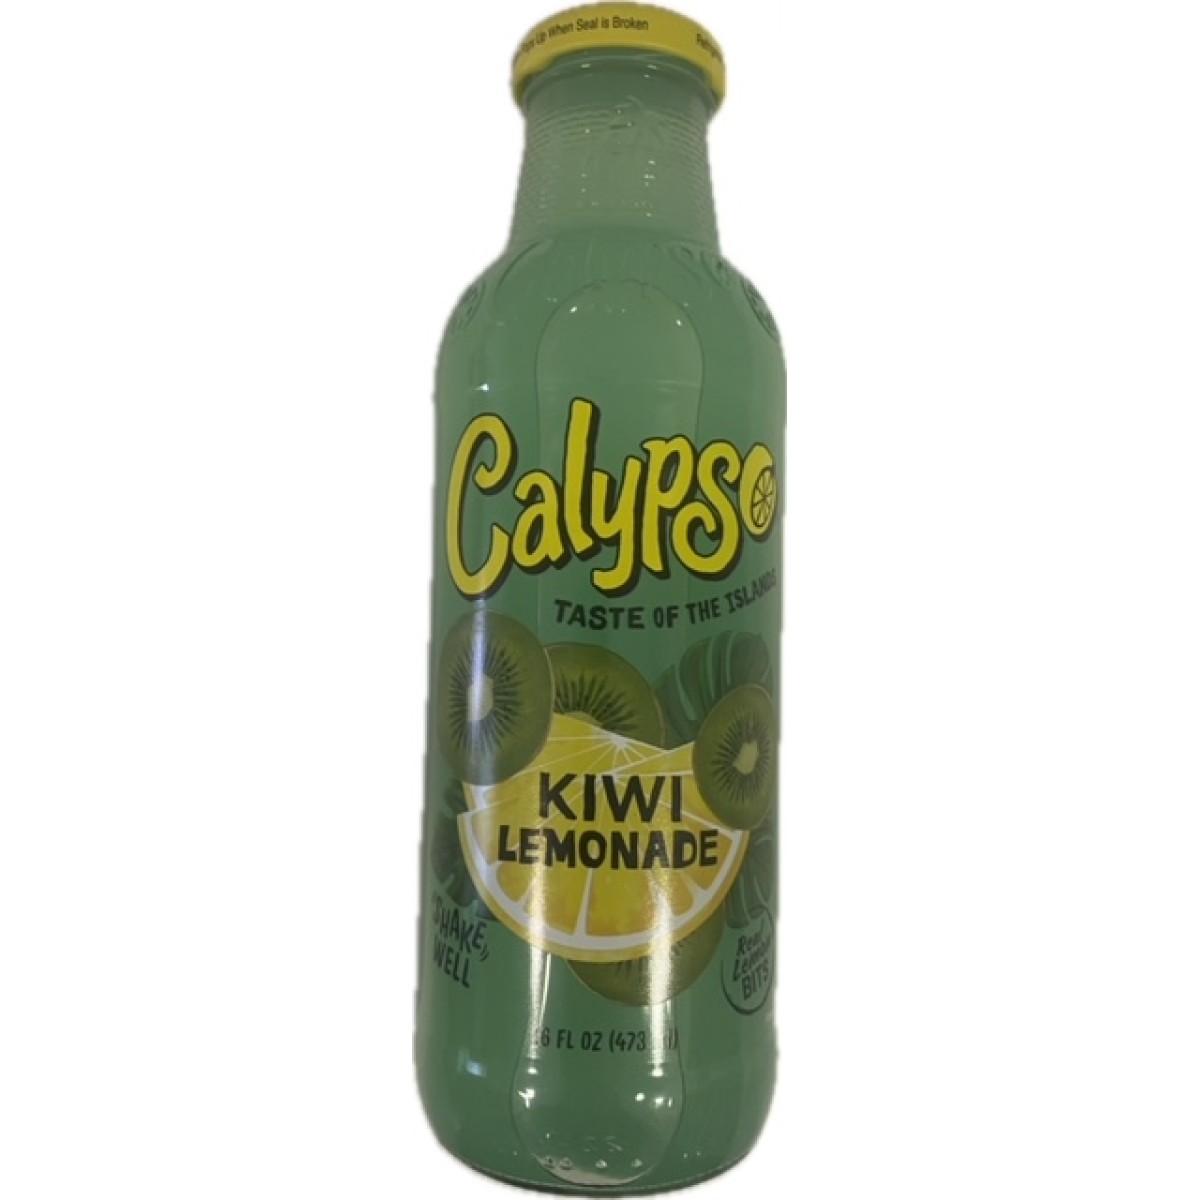 Calypso kiwi